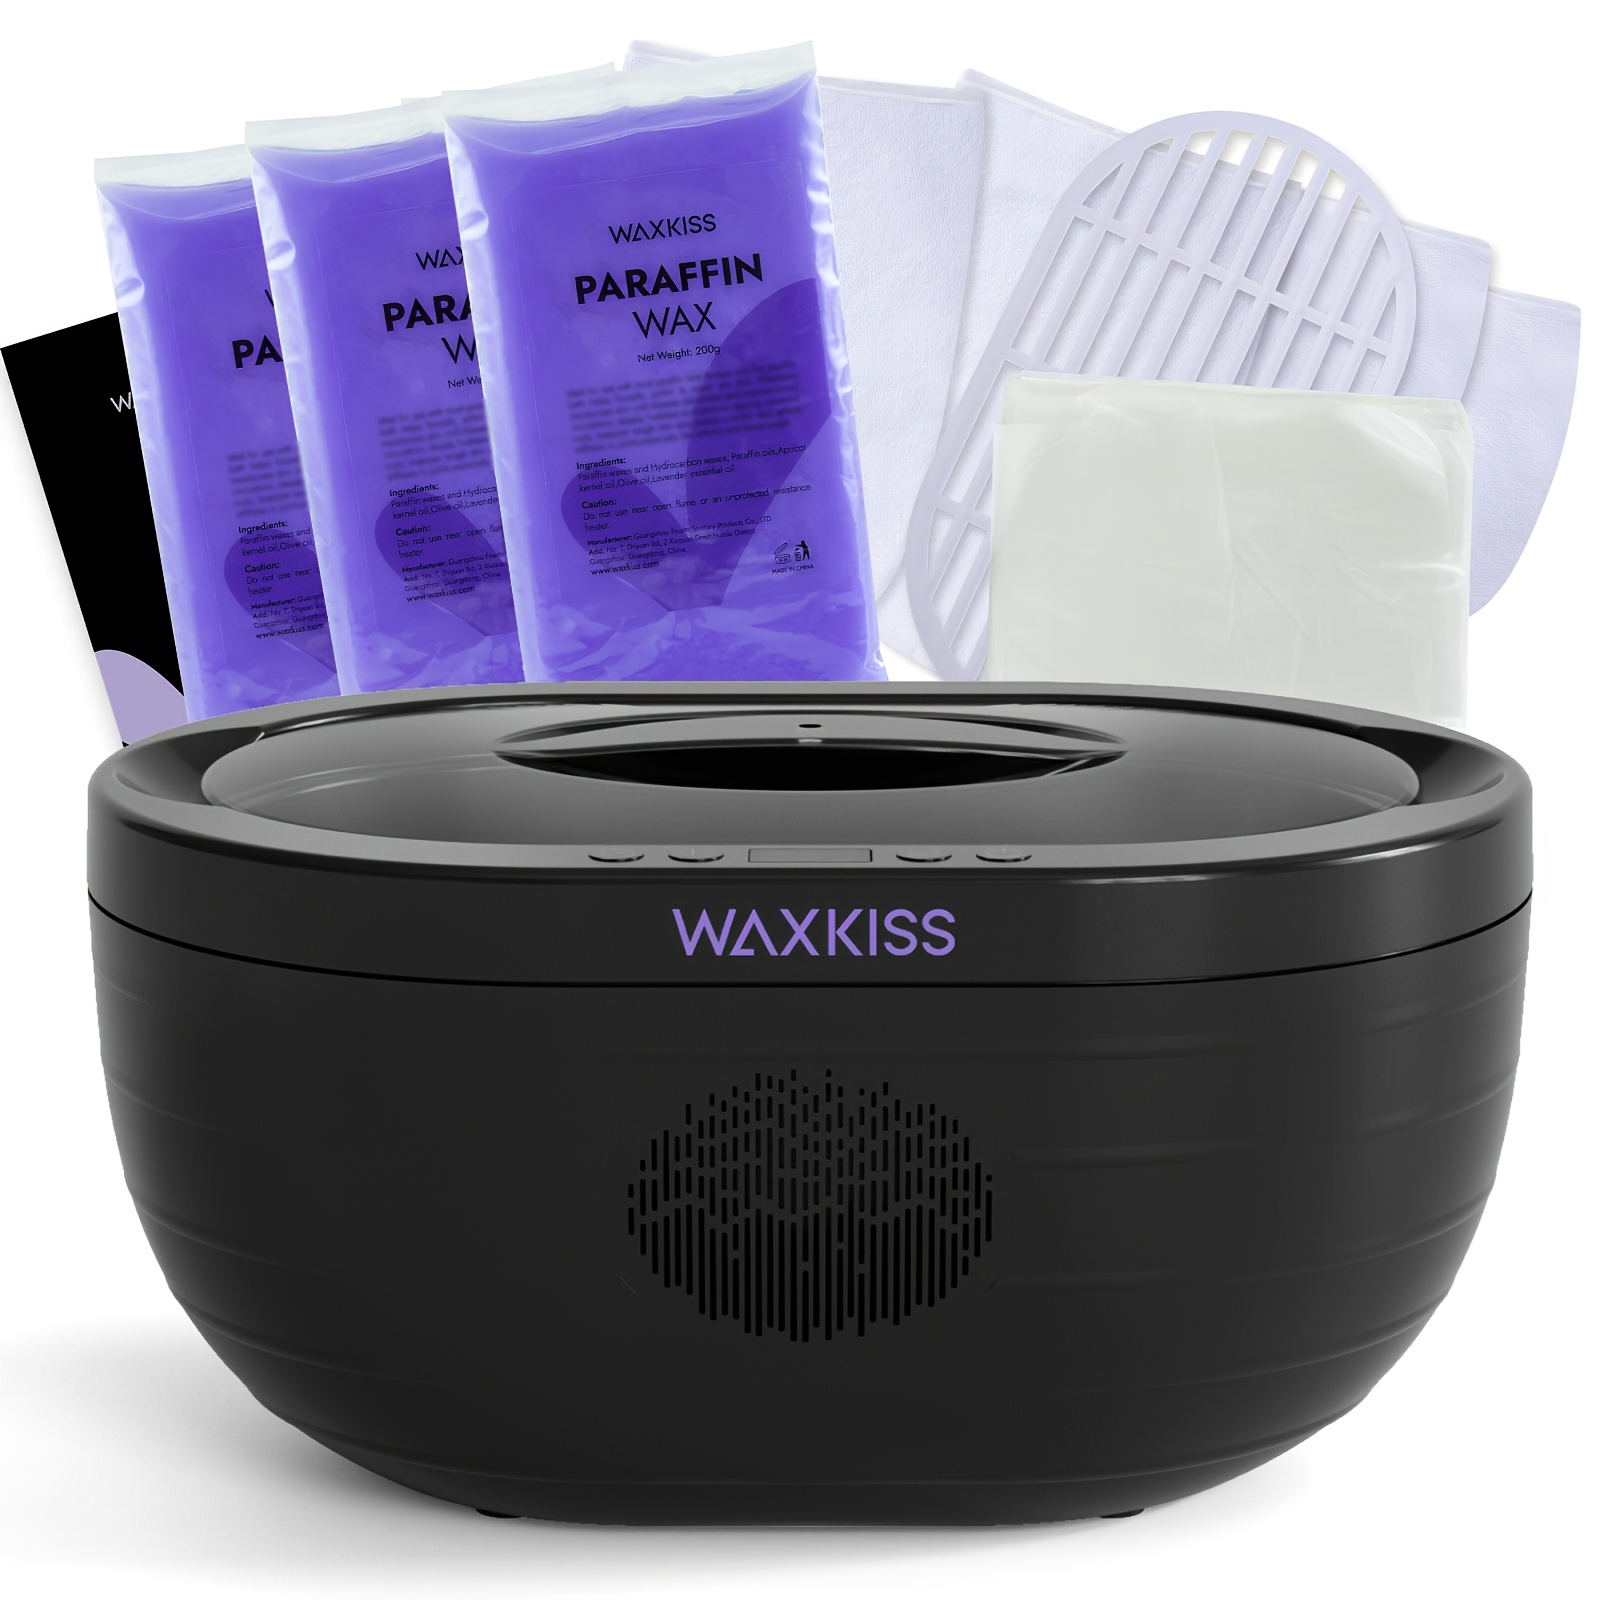 Paraffin Wax Machine for Hand and Feet -Paraffin Wax Warmer